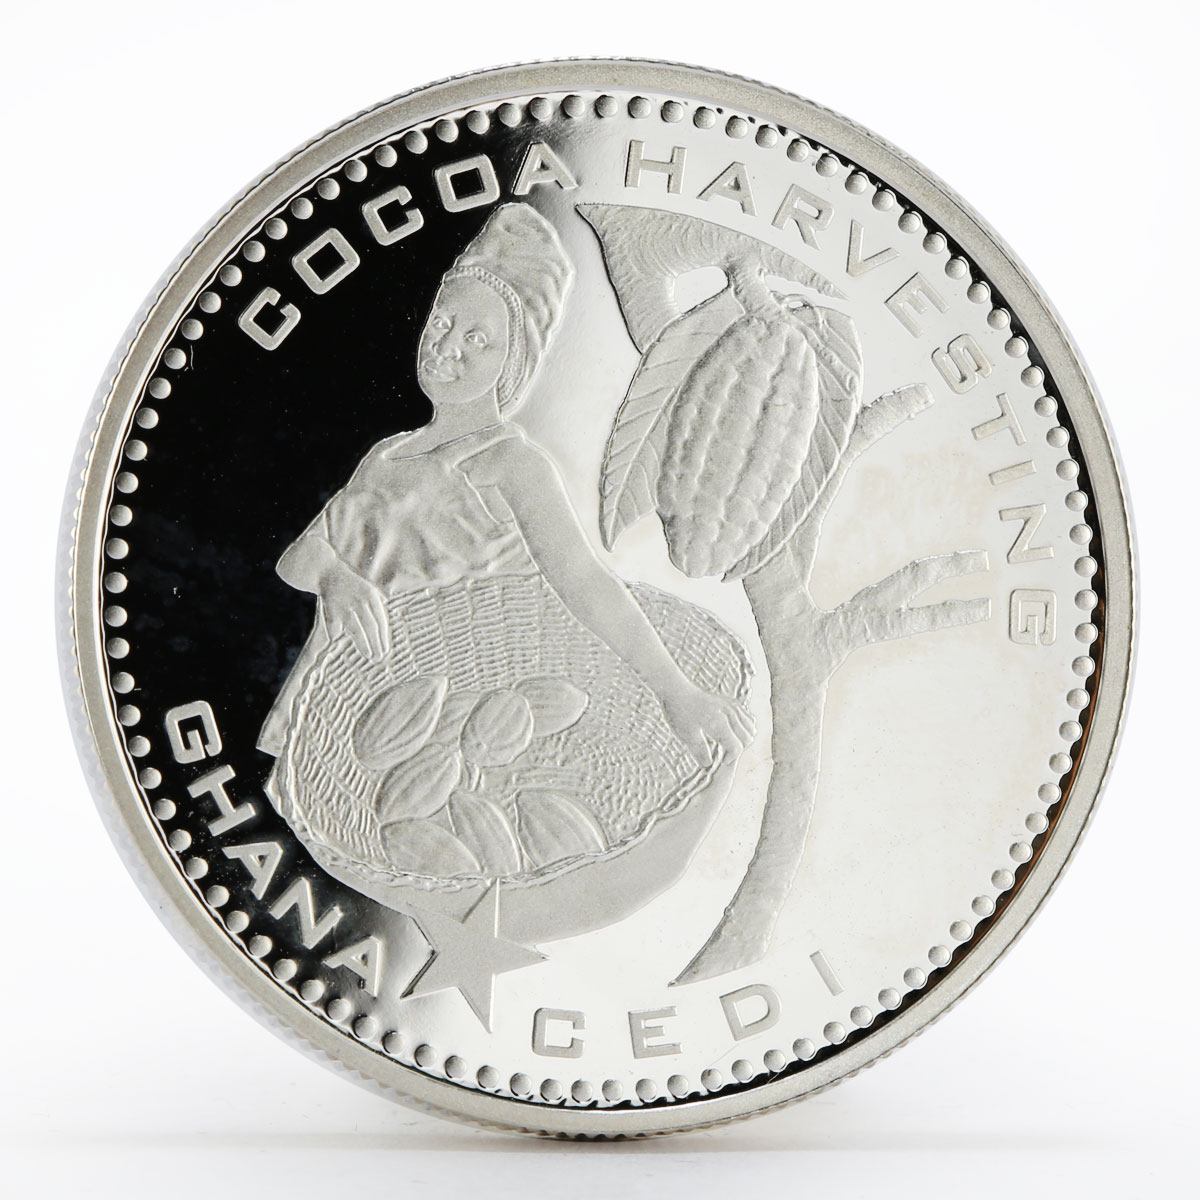 Ghana 1 cedi Cocoa Harvesting proof silver coin 2007